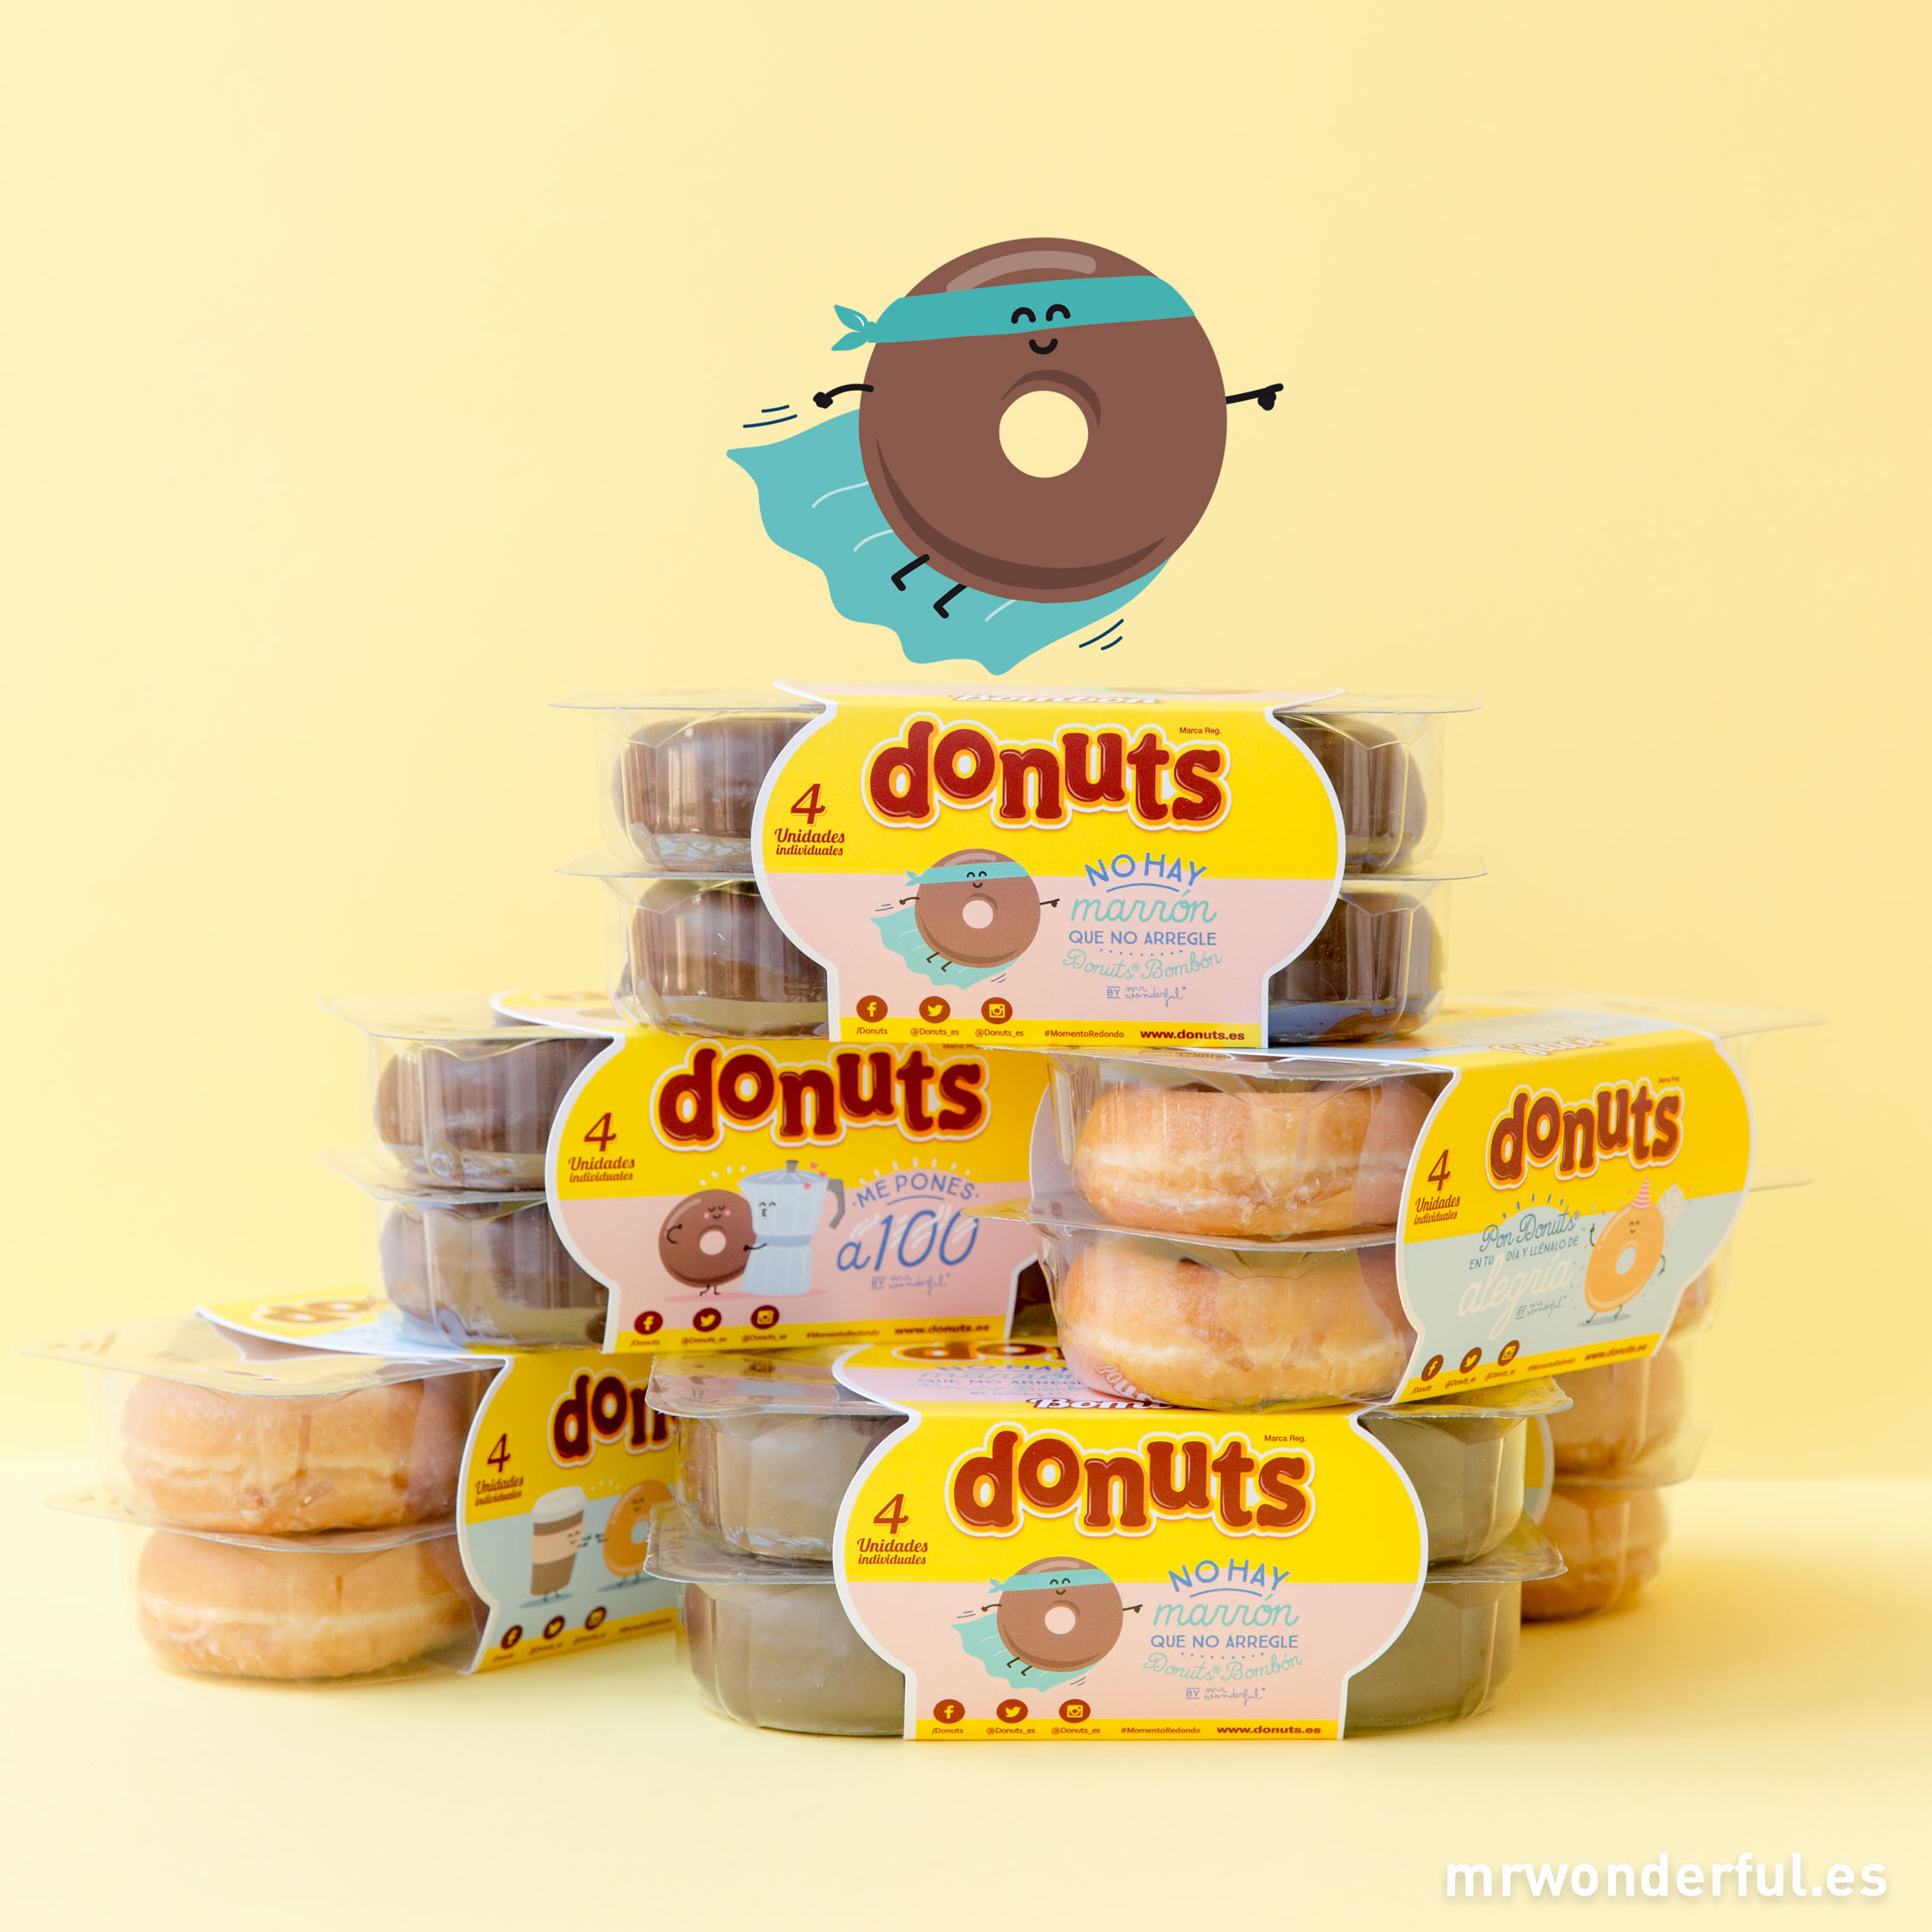 mrwonderful_donuts-2016-14-Editar